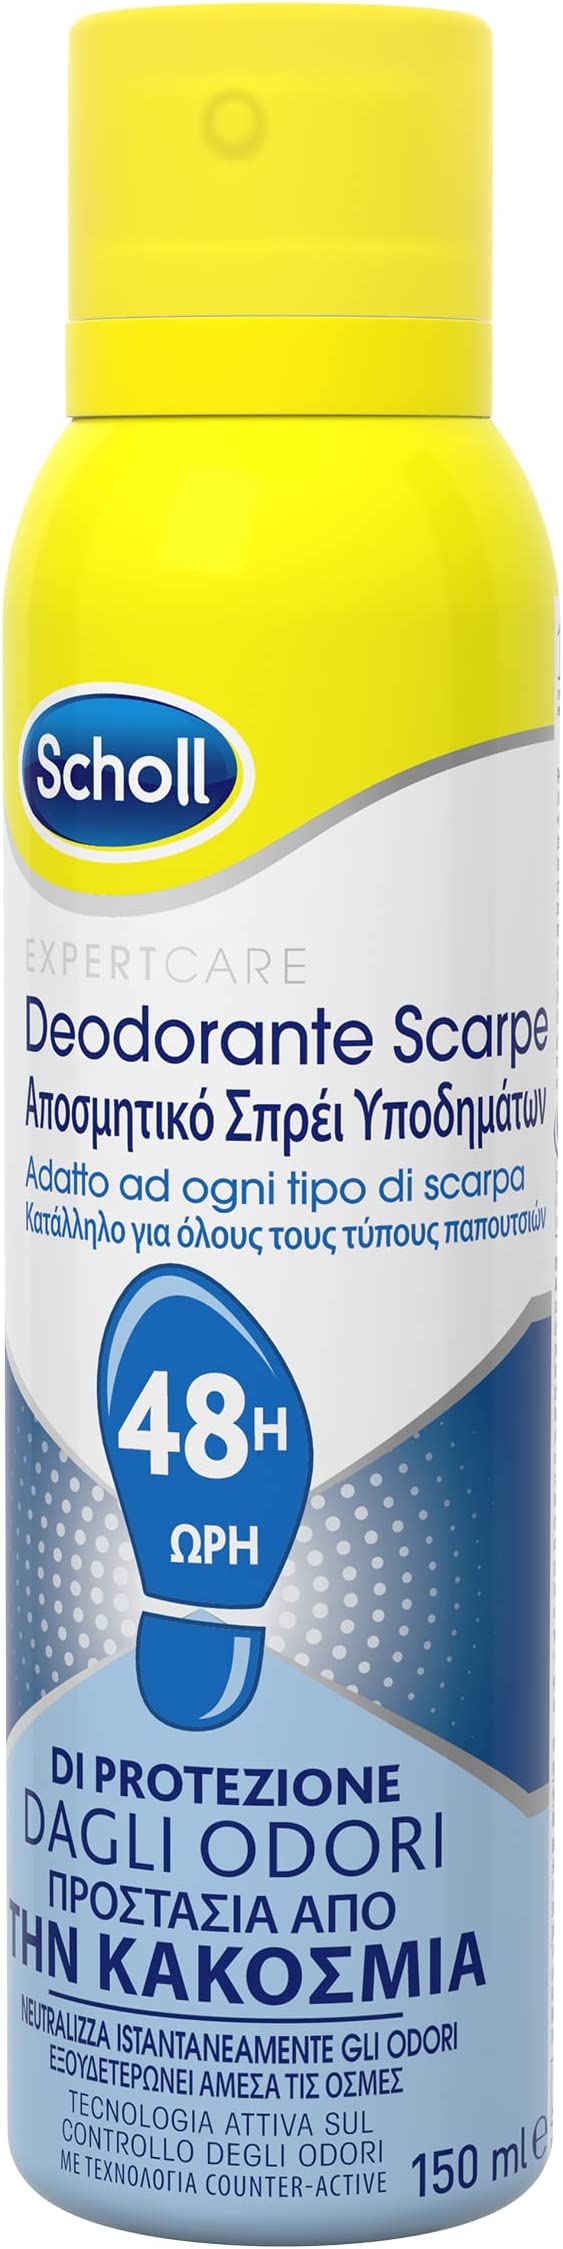 Scholl Deodorante Spray Per Scarpe